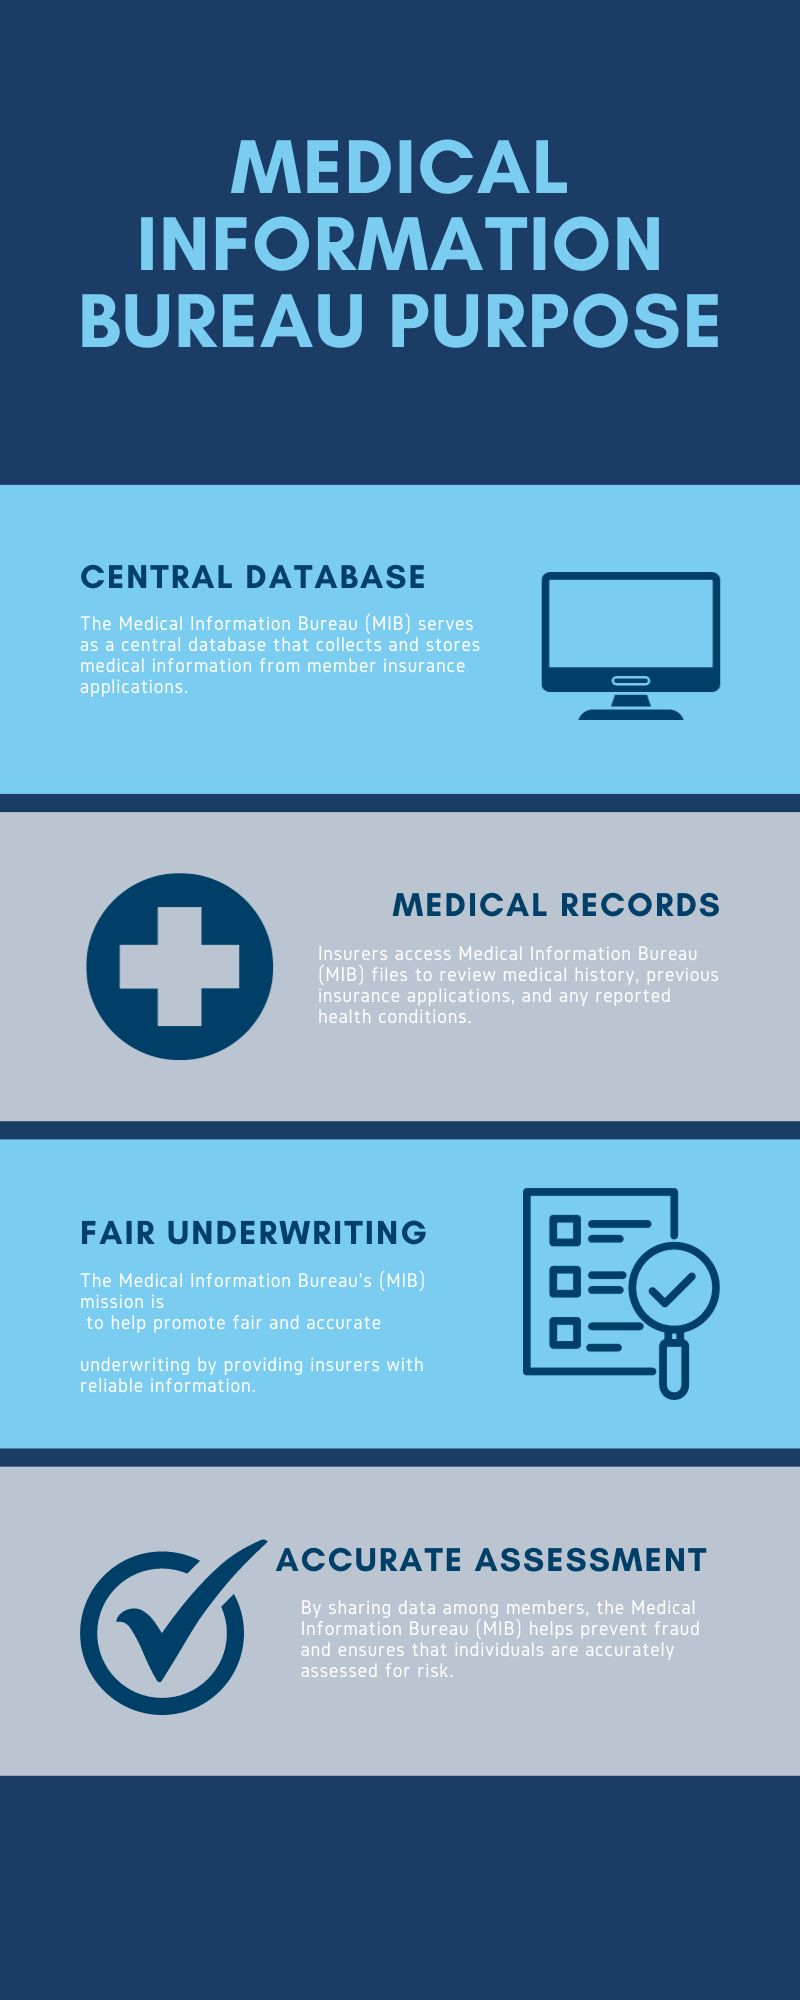 medical information bureau purpose infographic